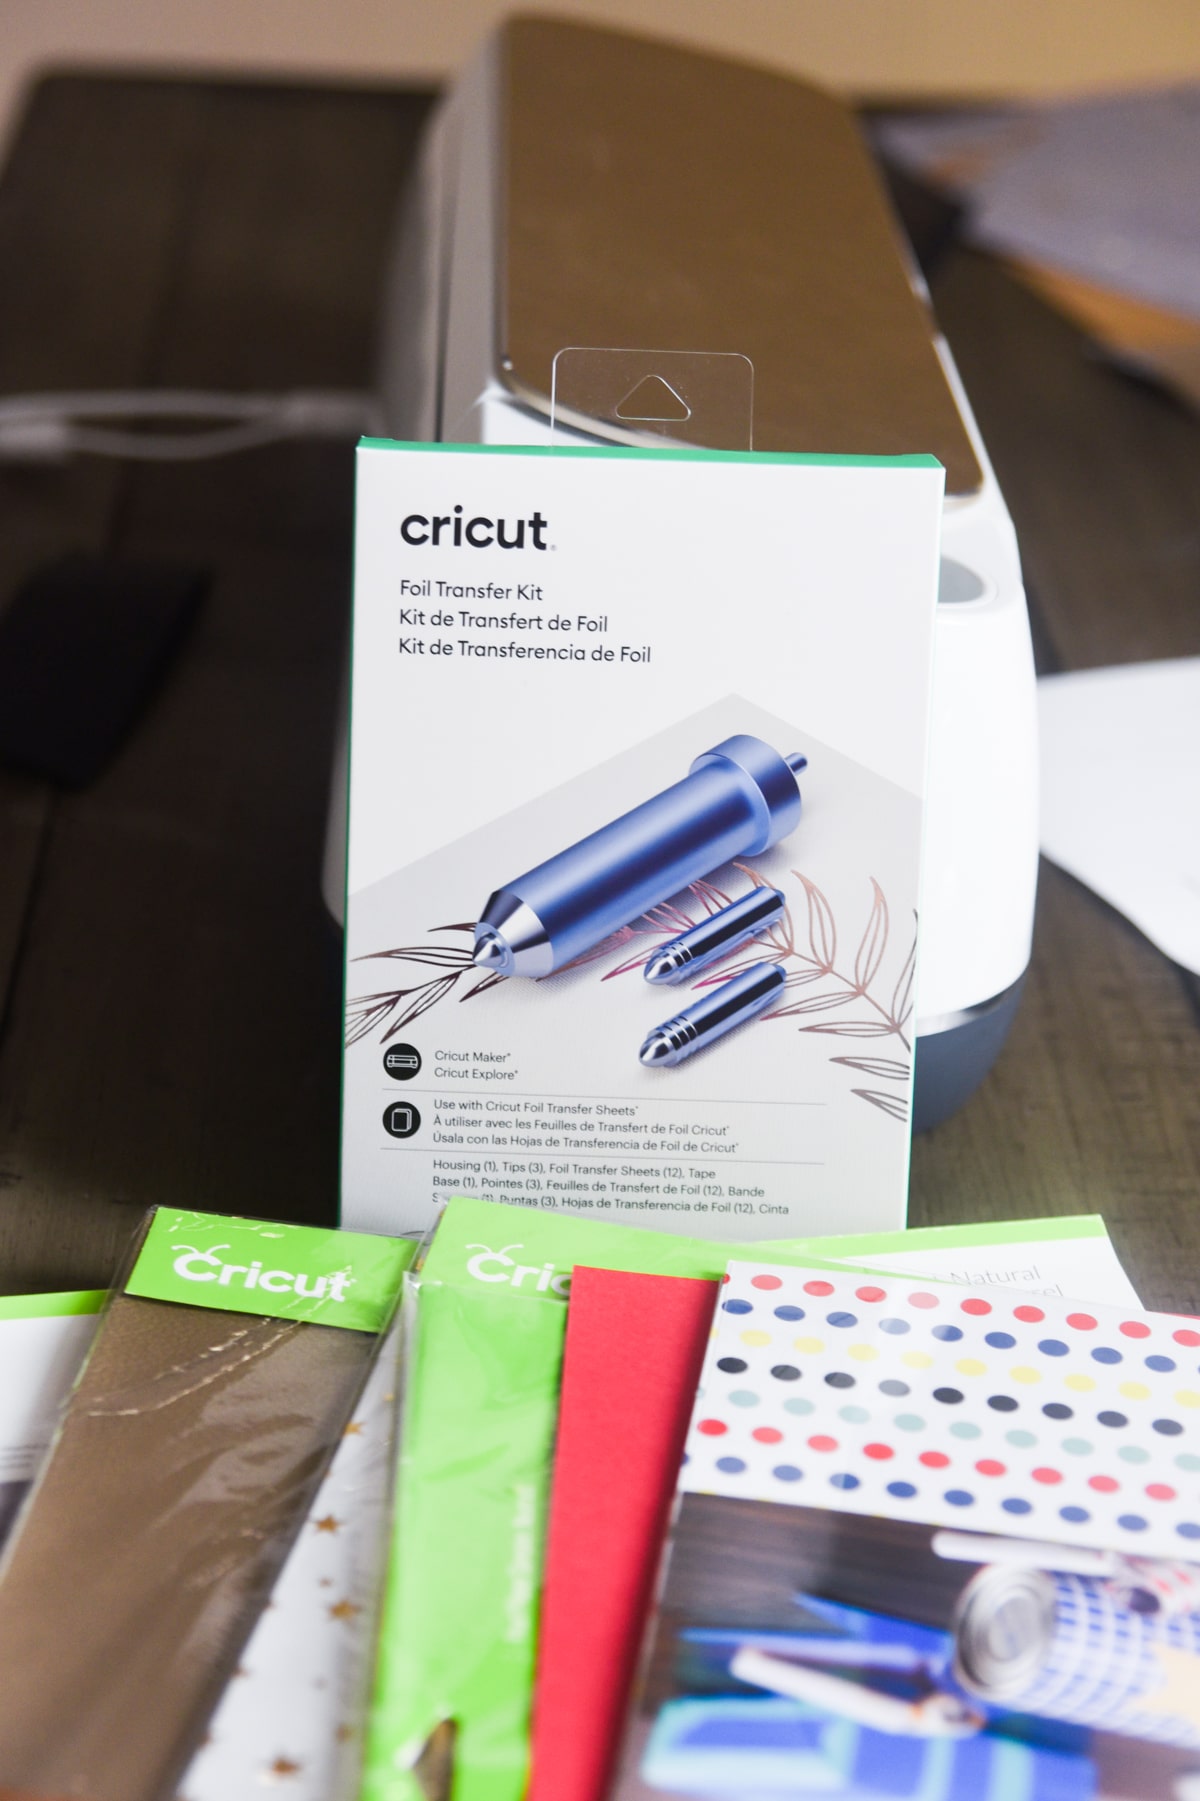 How to use the Cricut Foil Transfer Kit 